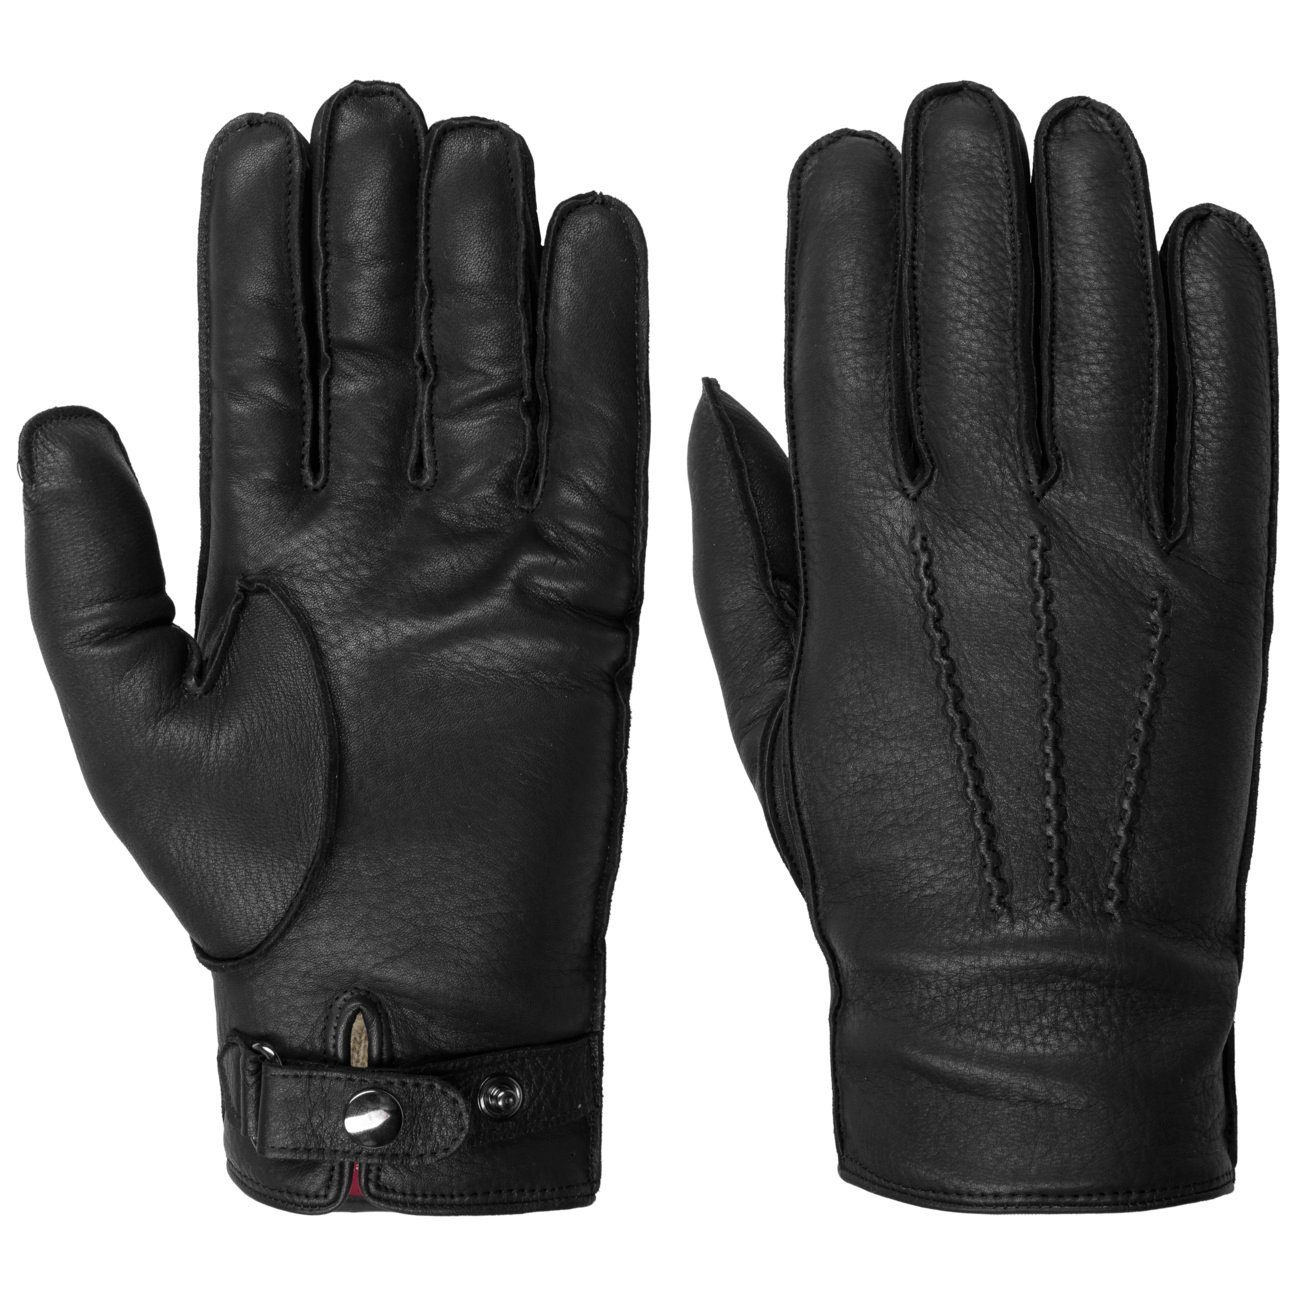 Caridei Lederhandschuhe Fingerhandschuhe mit Futter, Made in Italy schwarz